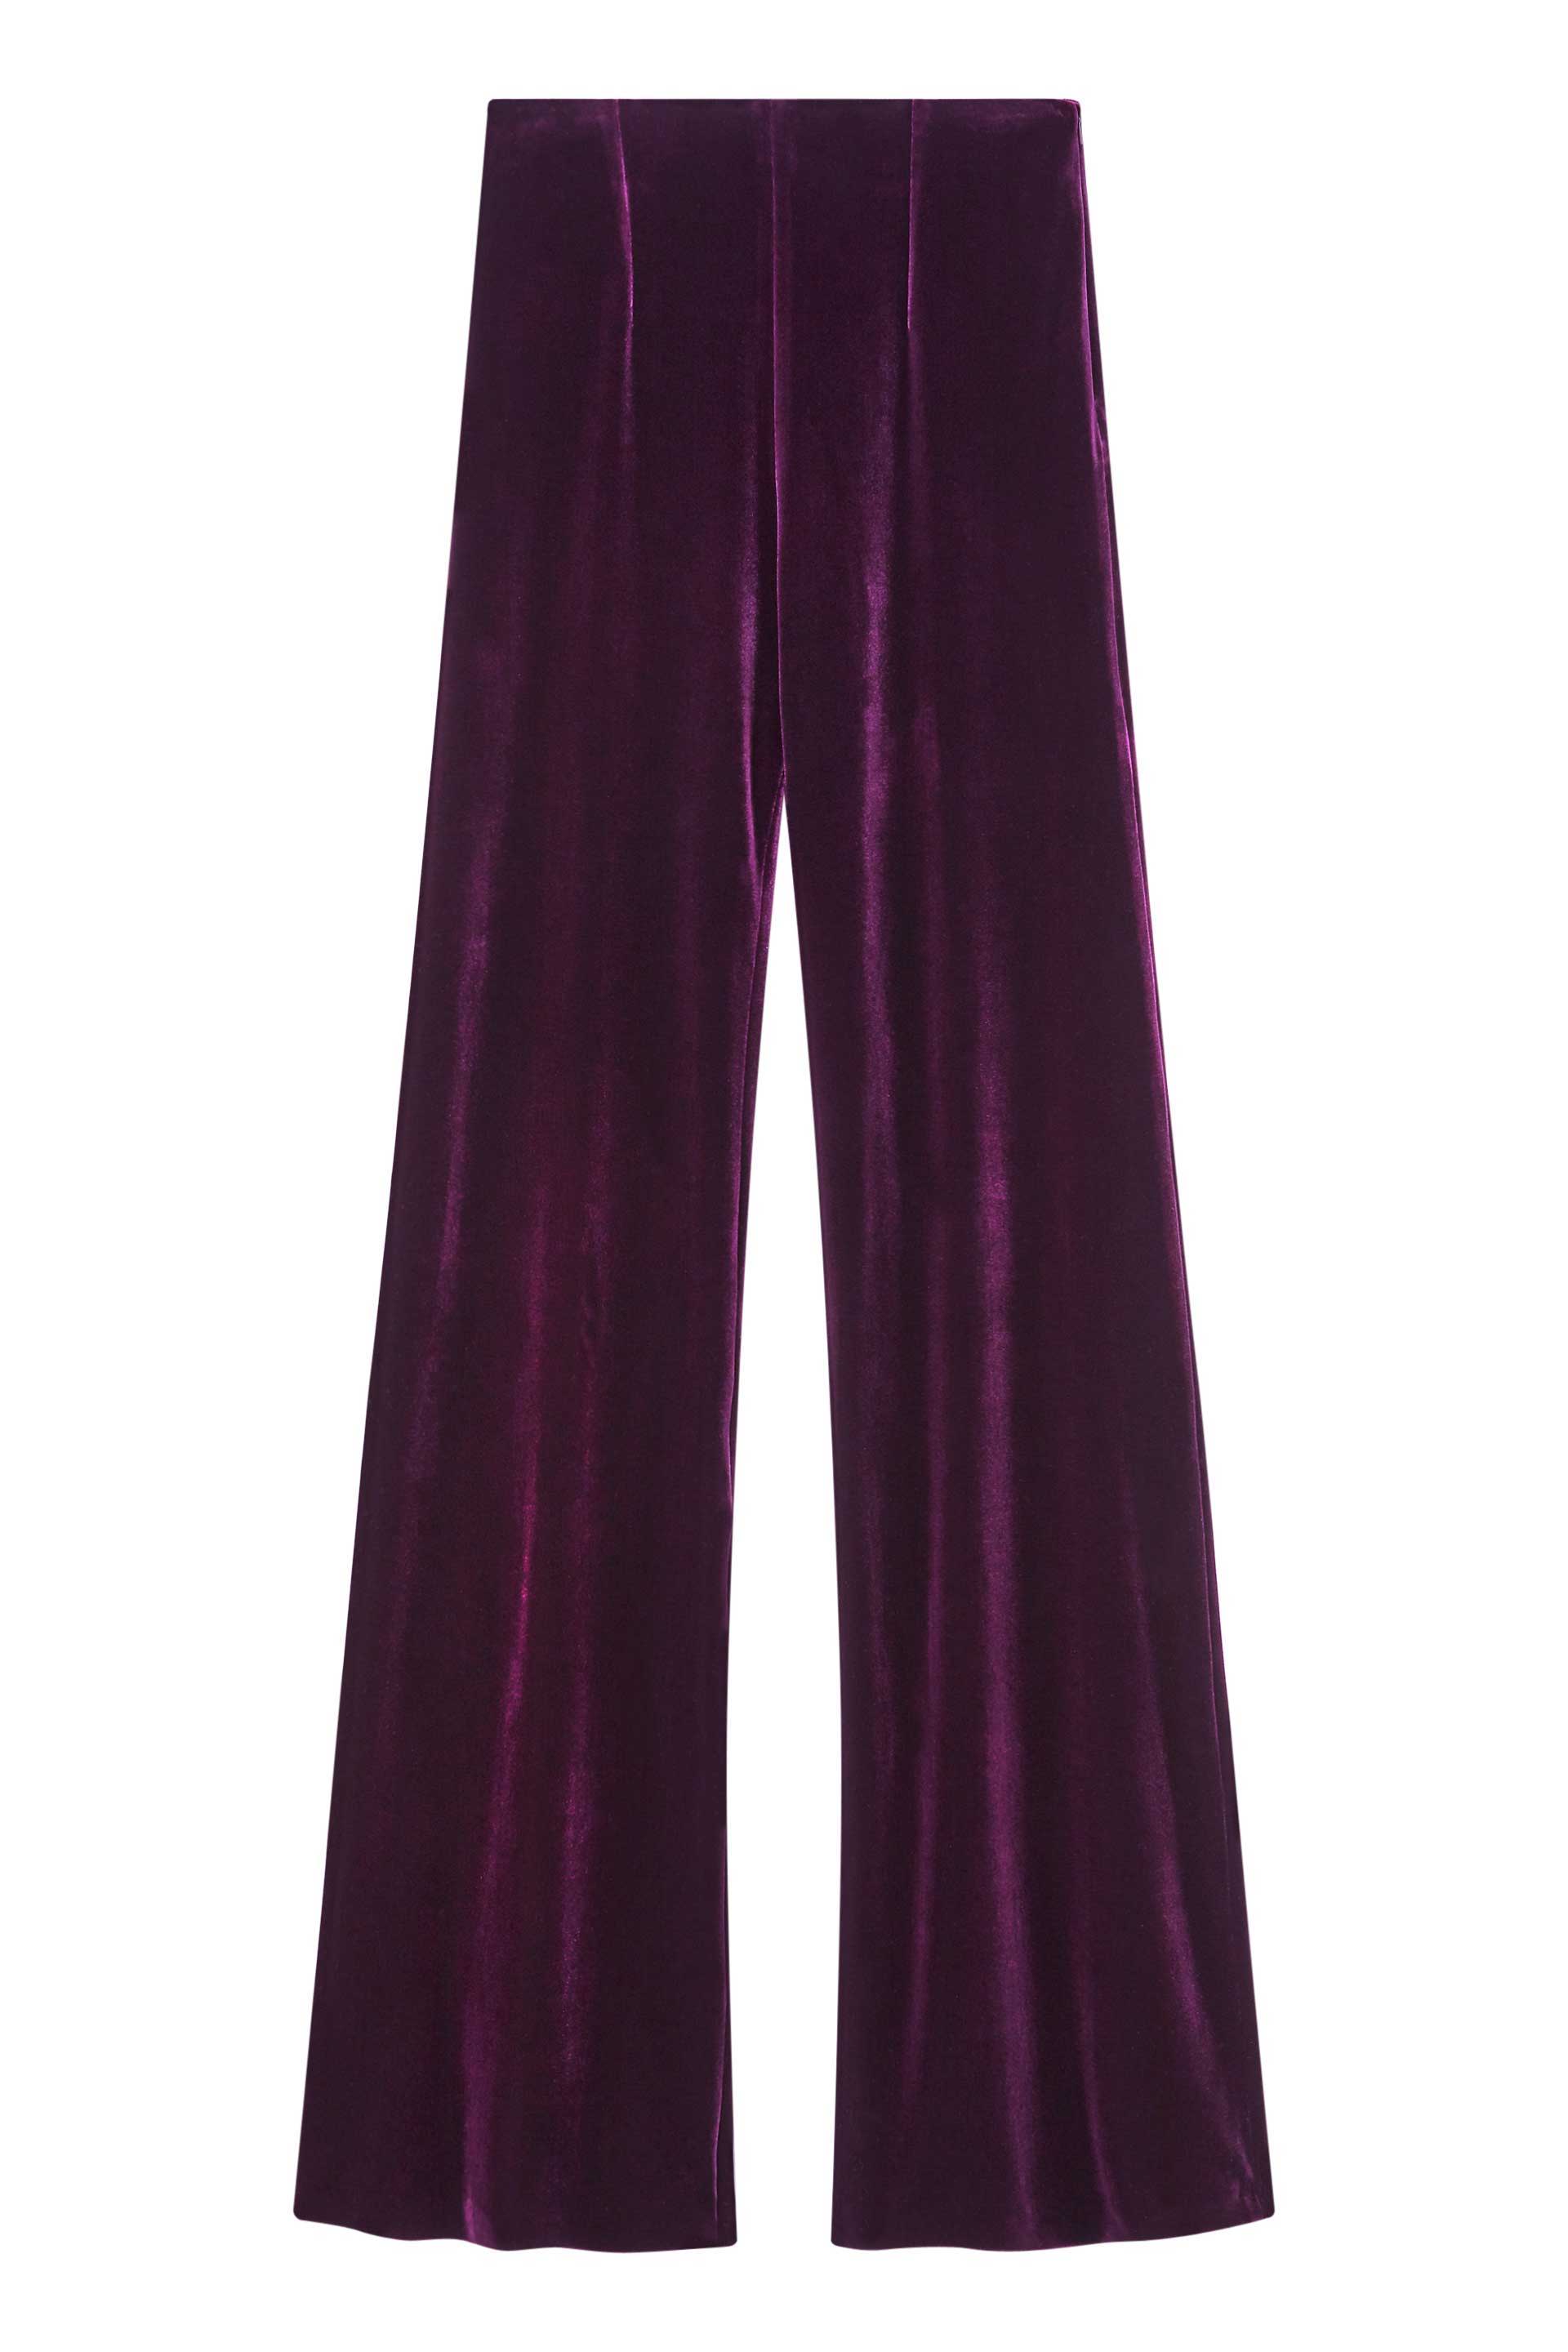 Galvan London Velvet Purple Trousers